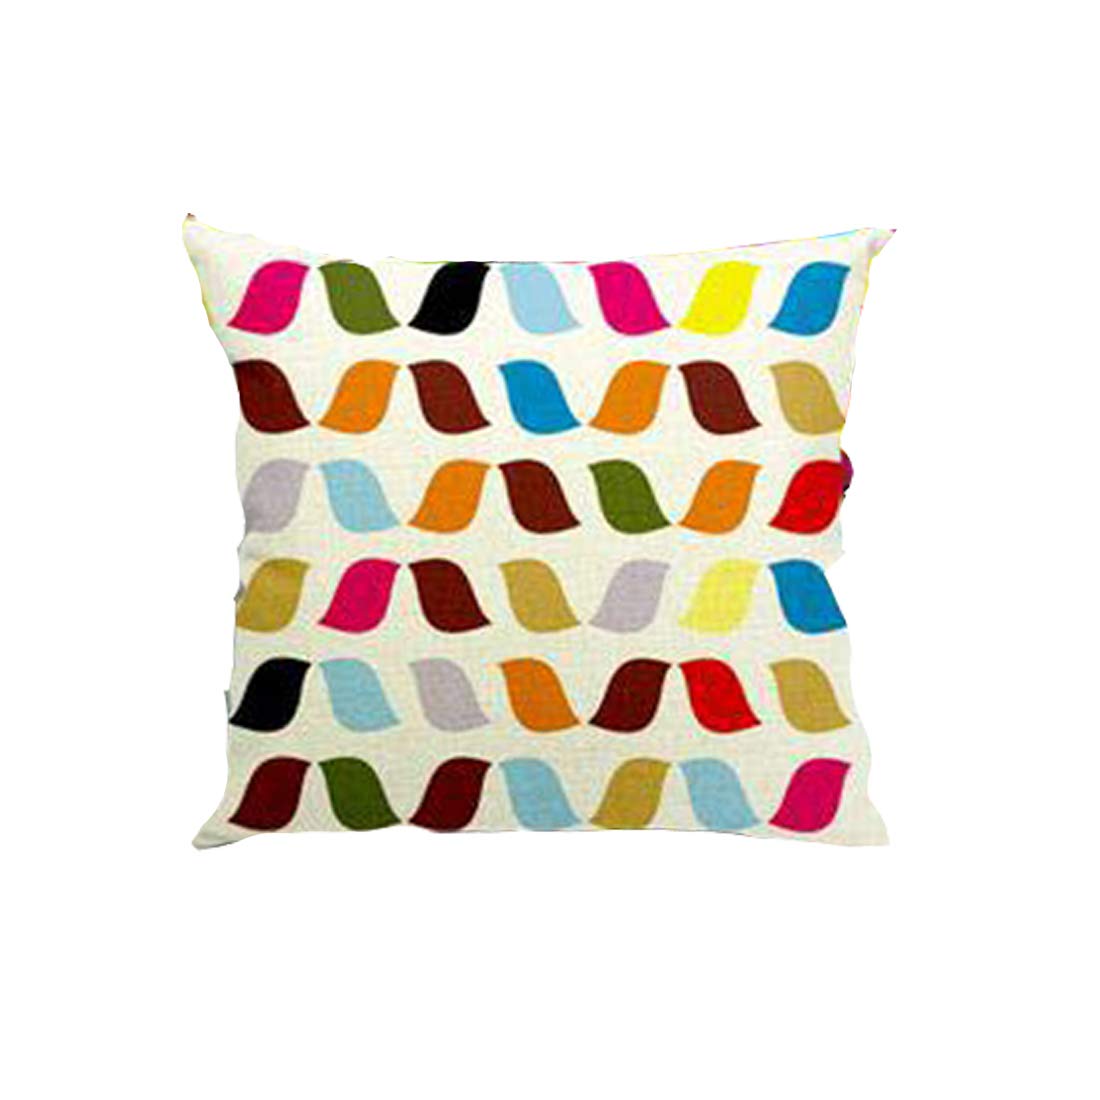 Detec Desi Kapda Floral Cushions Cover (Pack of 5, 40 cm*40 cm, Multicolor)